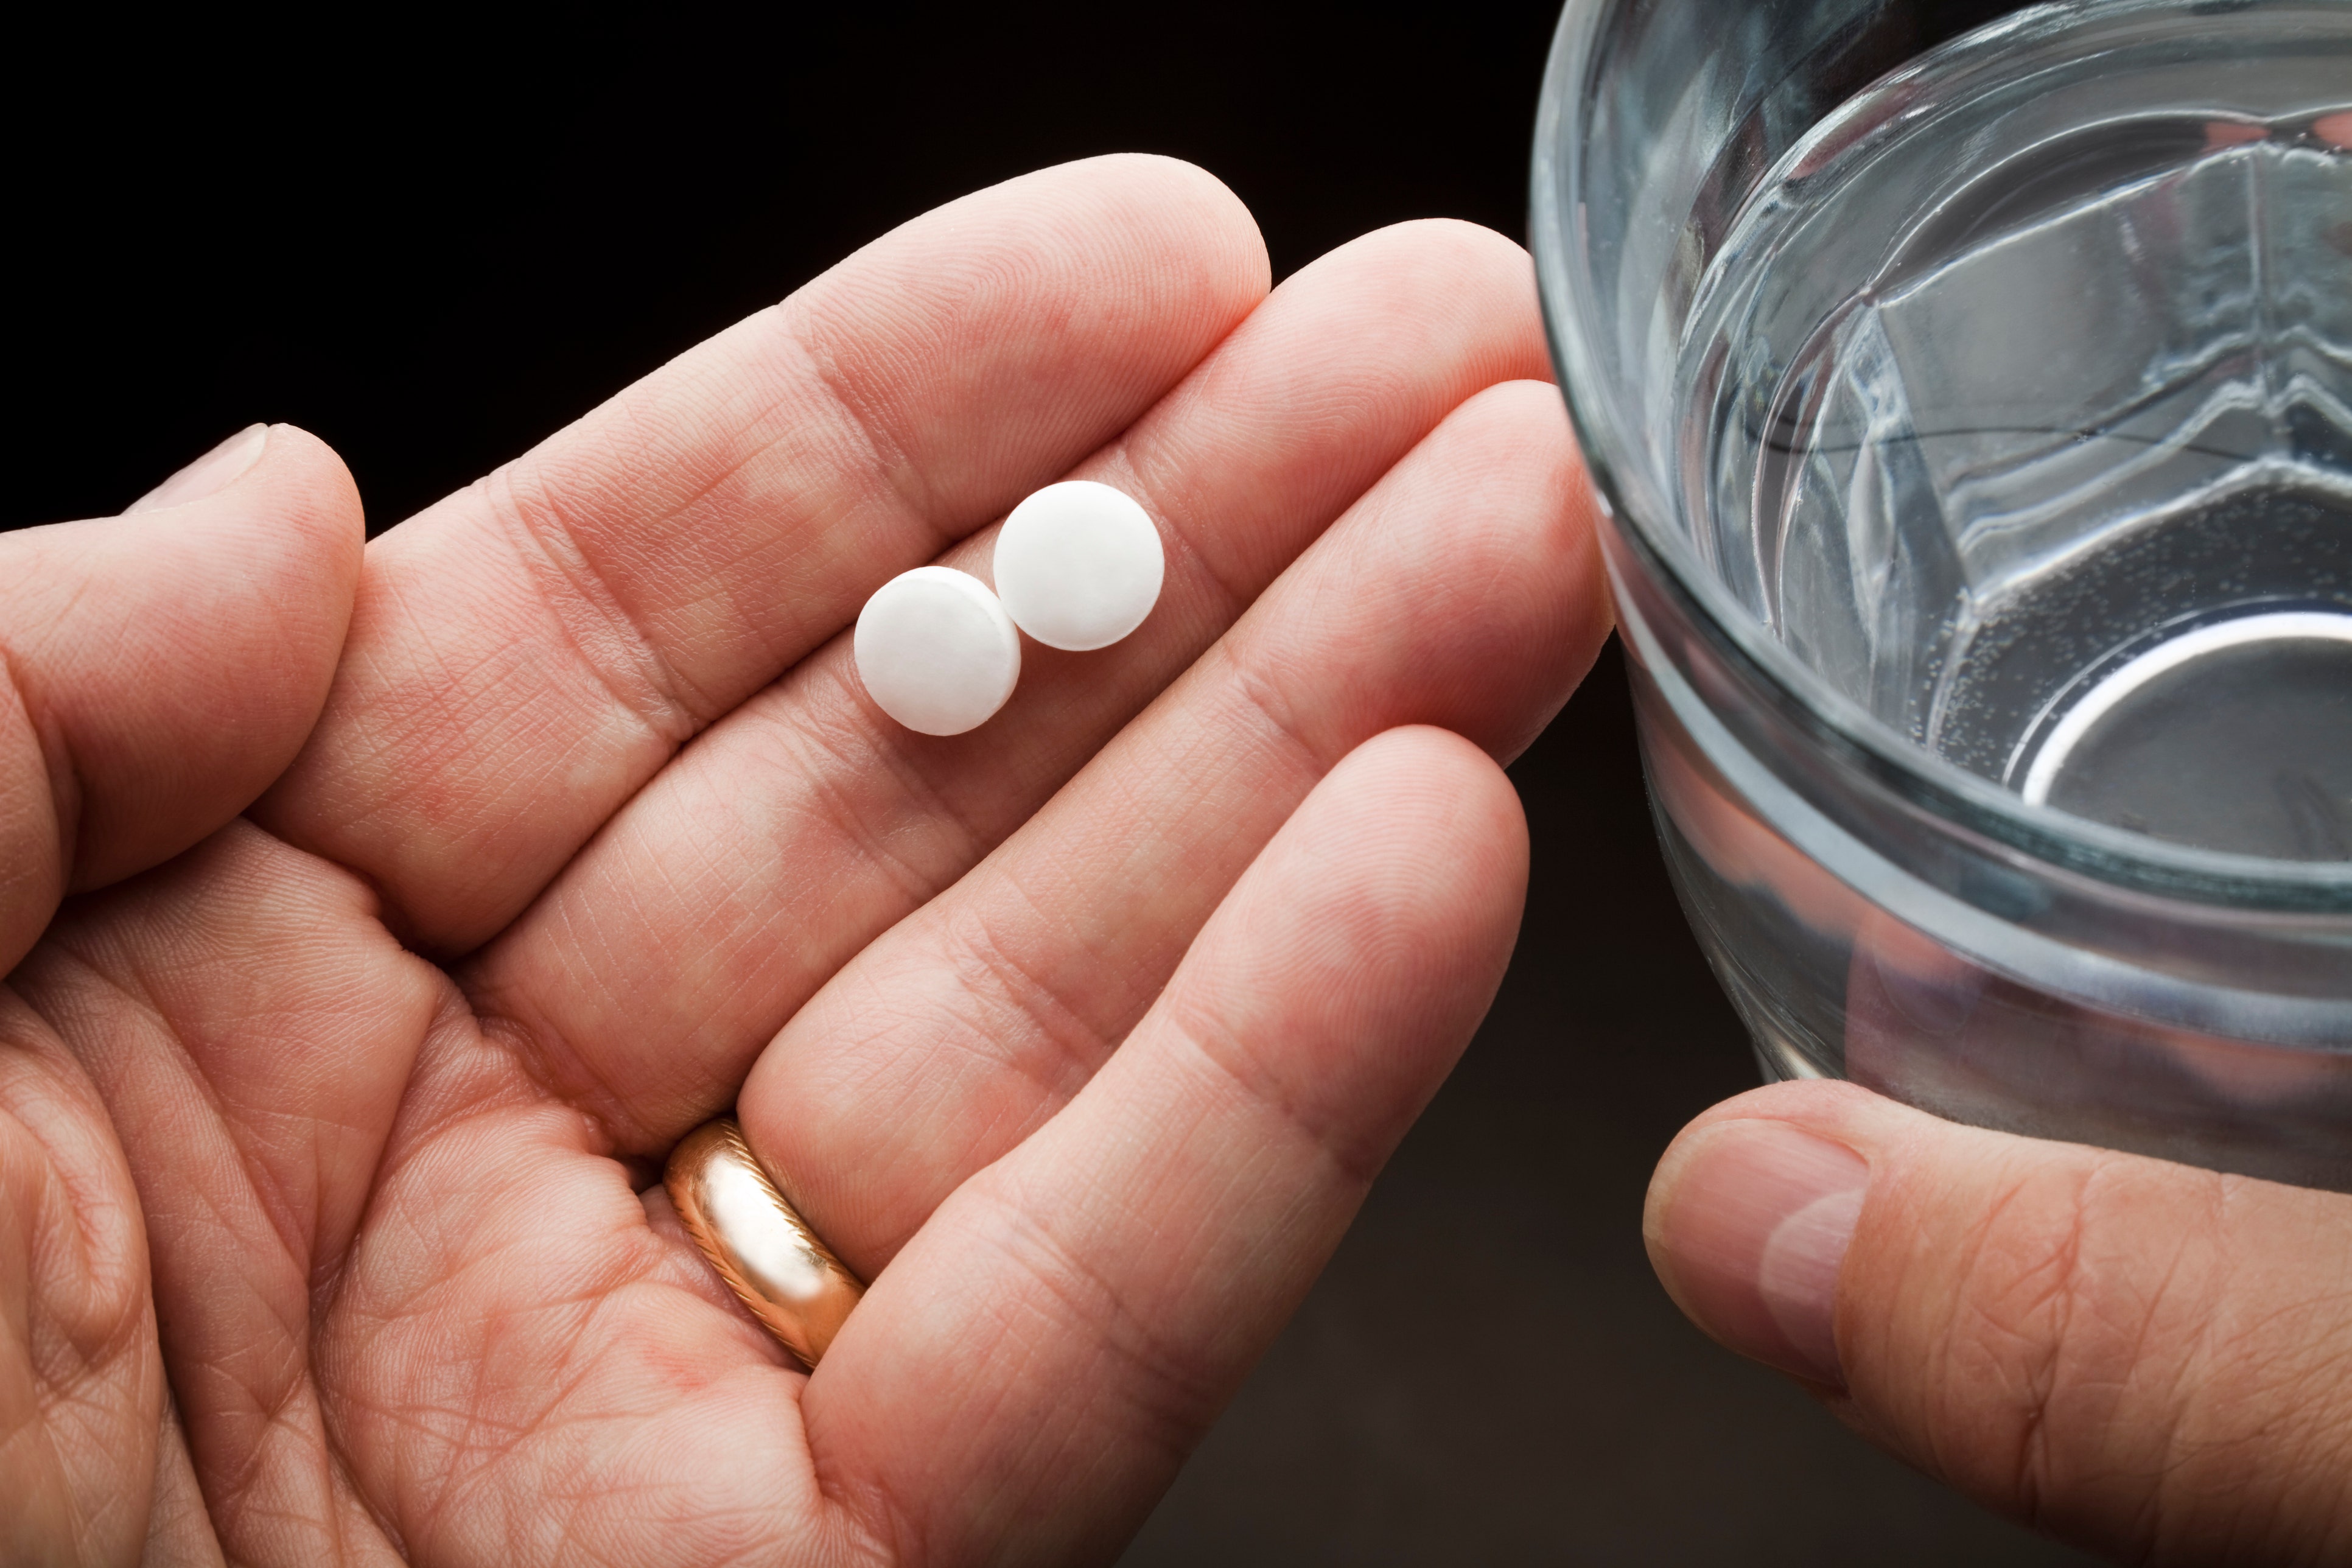 Low-dose aspirin reduces coronavirus risk, study shows